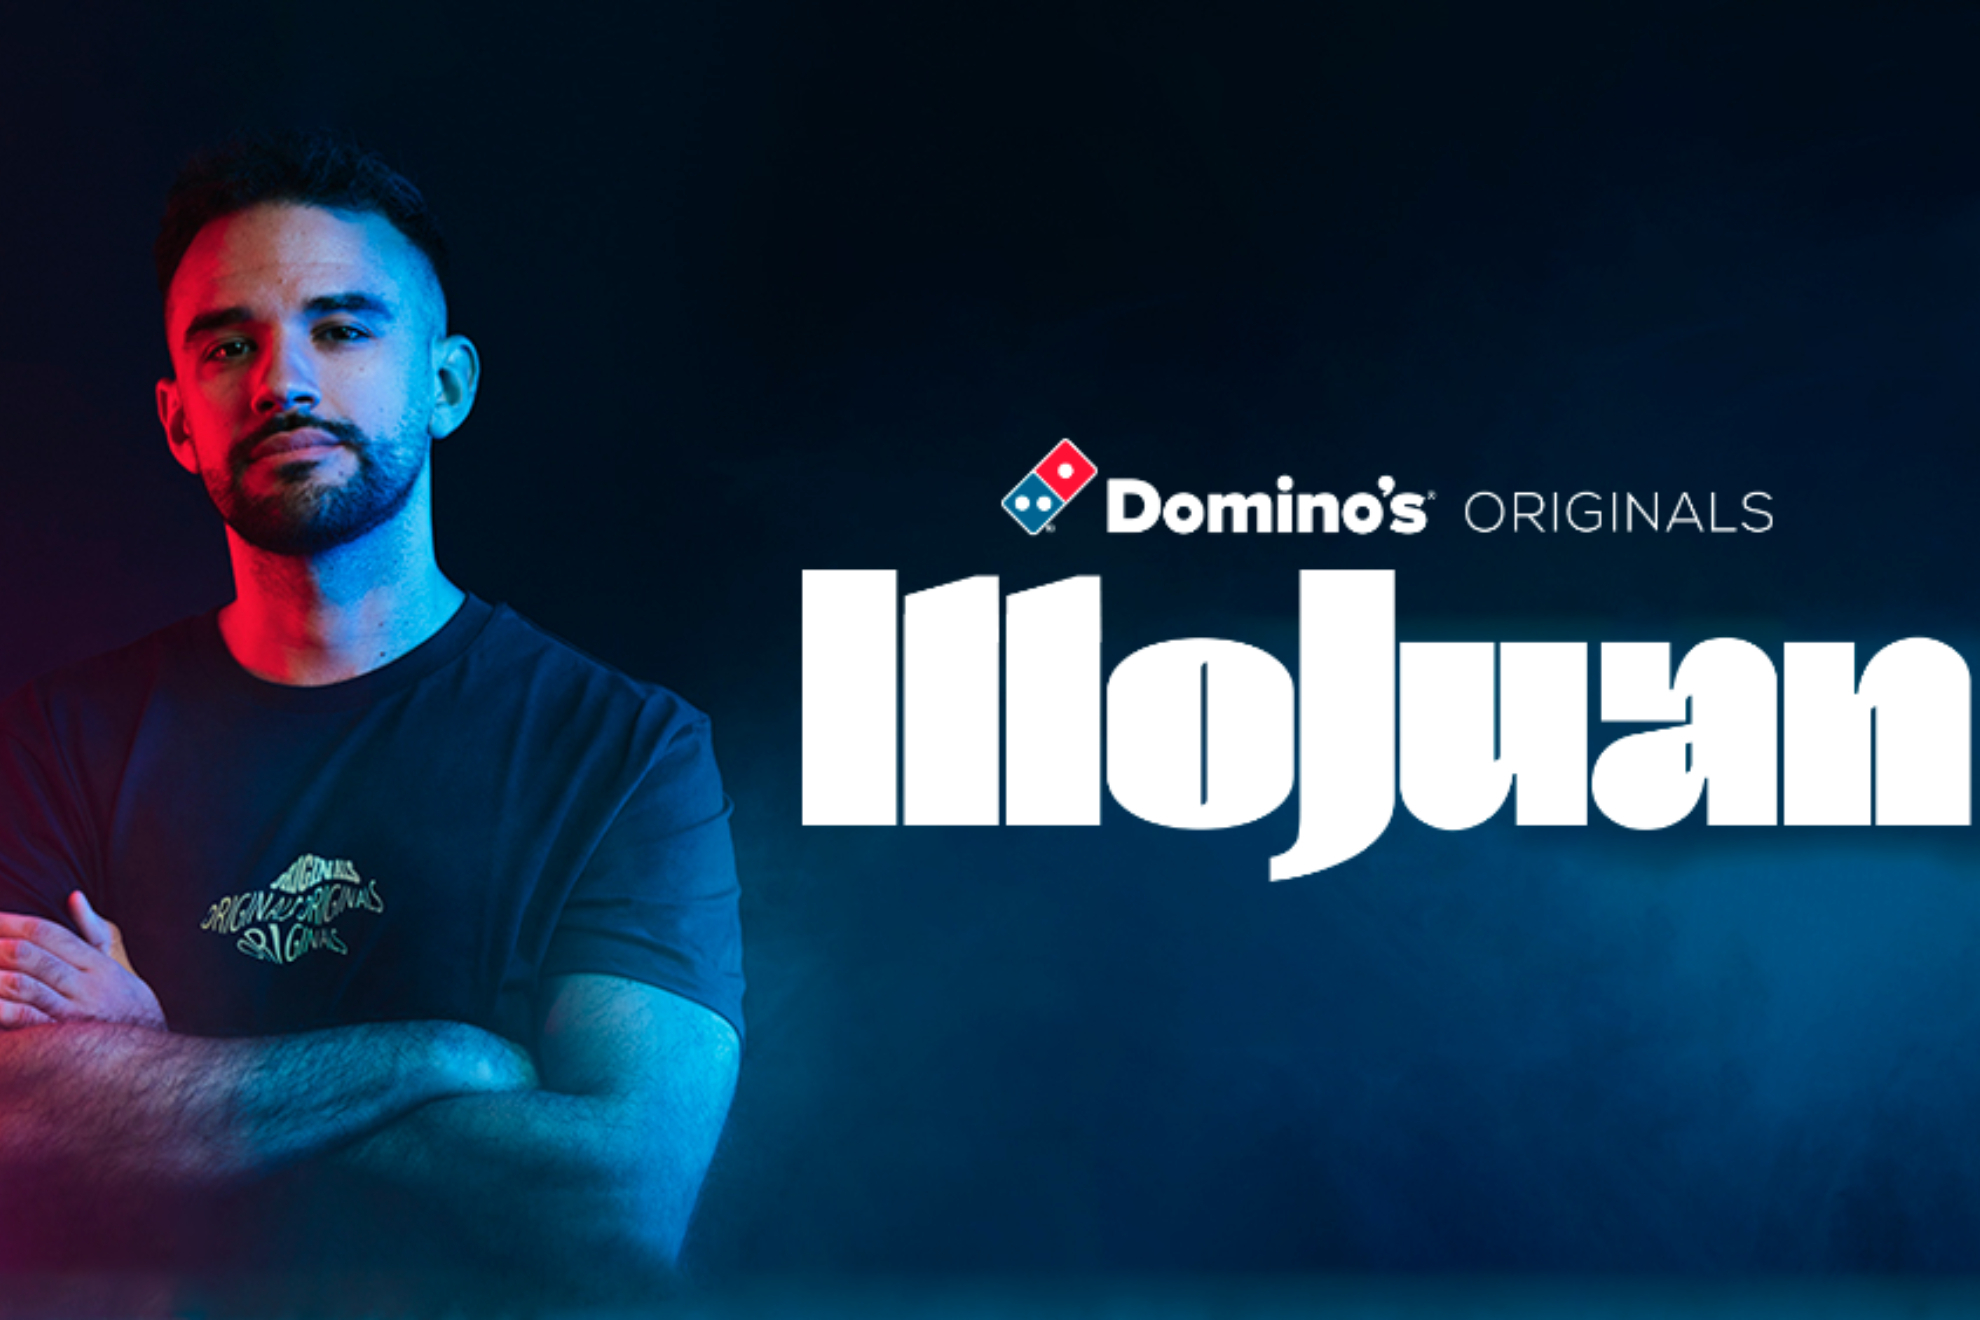 Domino's Pizza estrena en Twitch el documental Domino's Originals IlloJuan